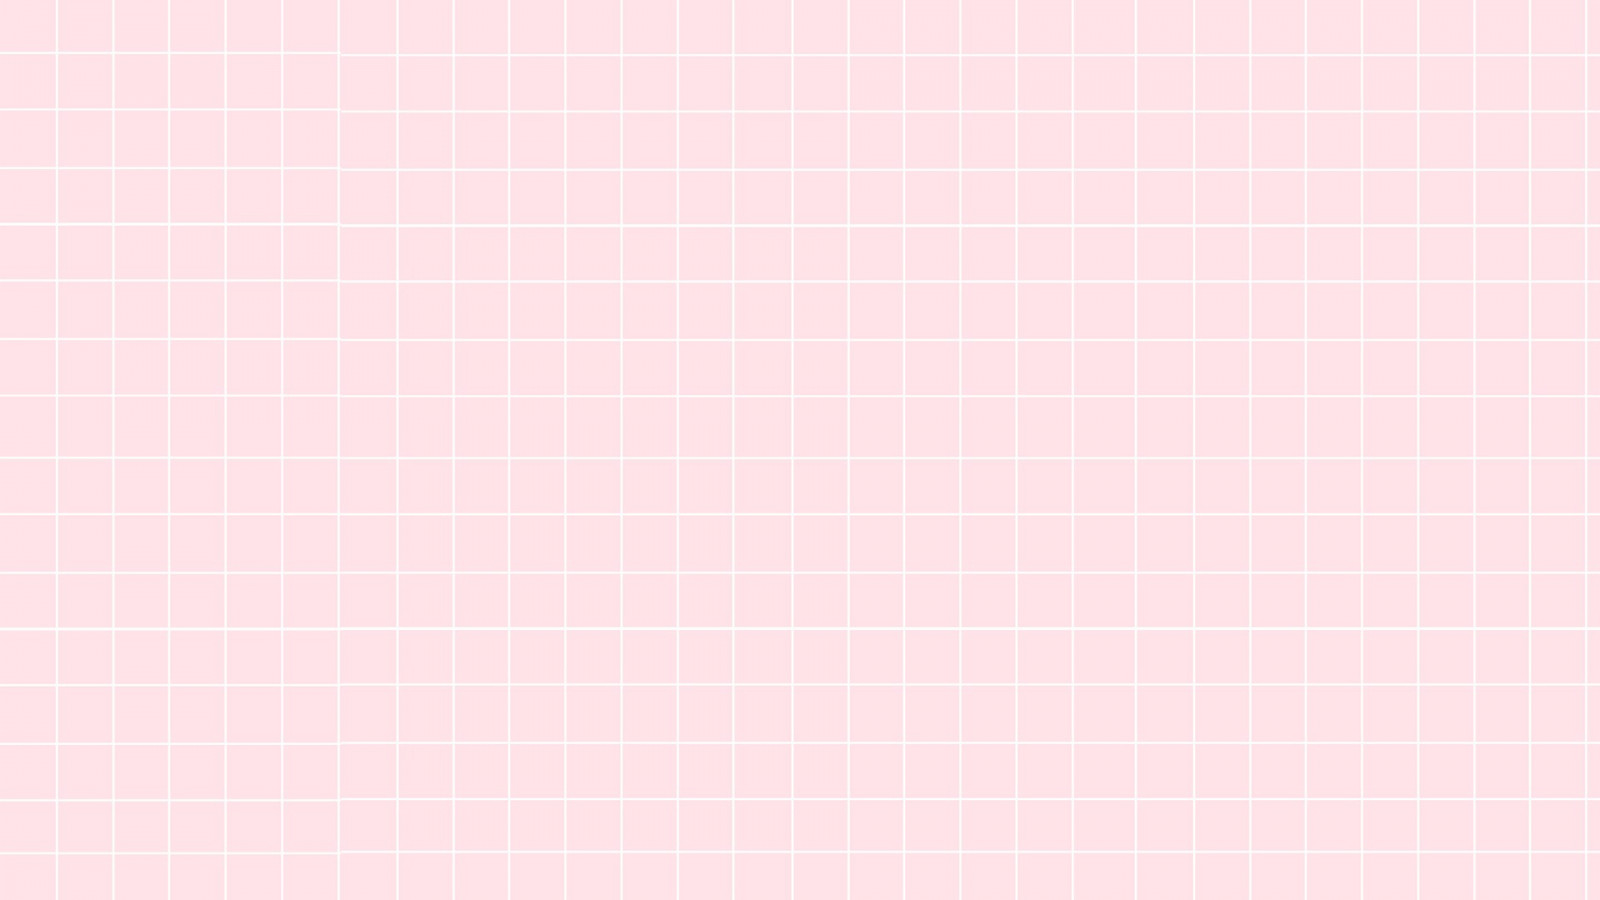 Wallpaper : 1920x1080 px, pink, vaporwave 1920x1080